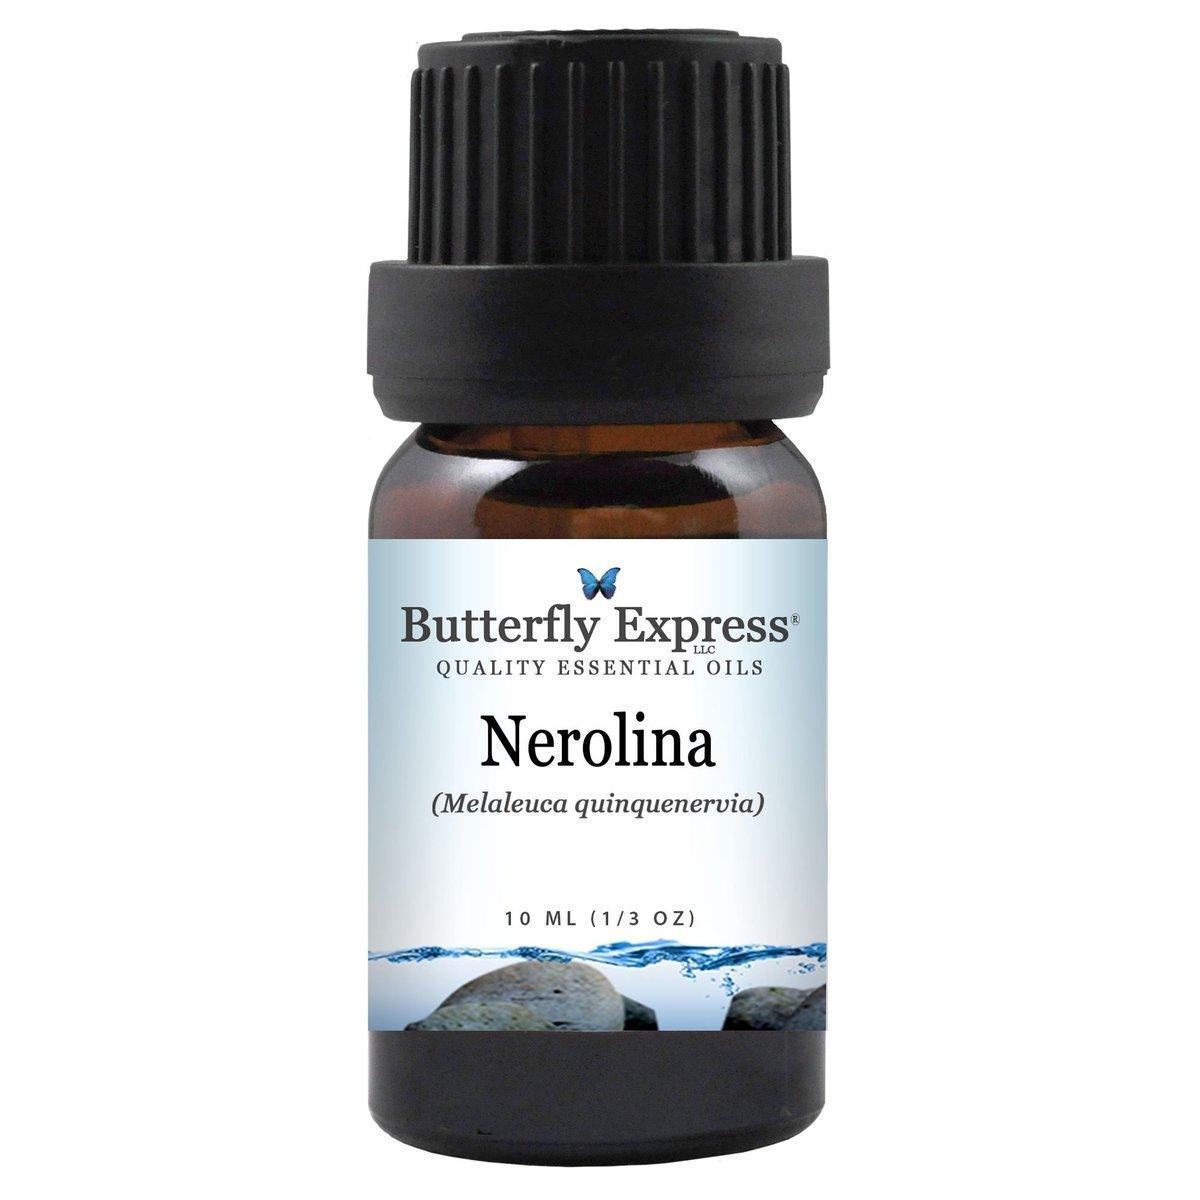 Nerolina essential oils